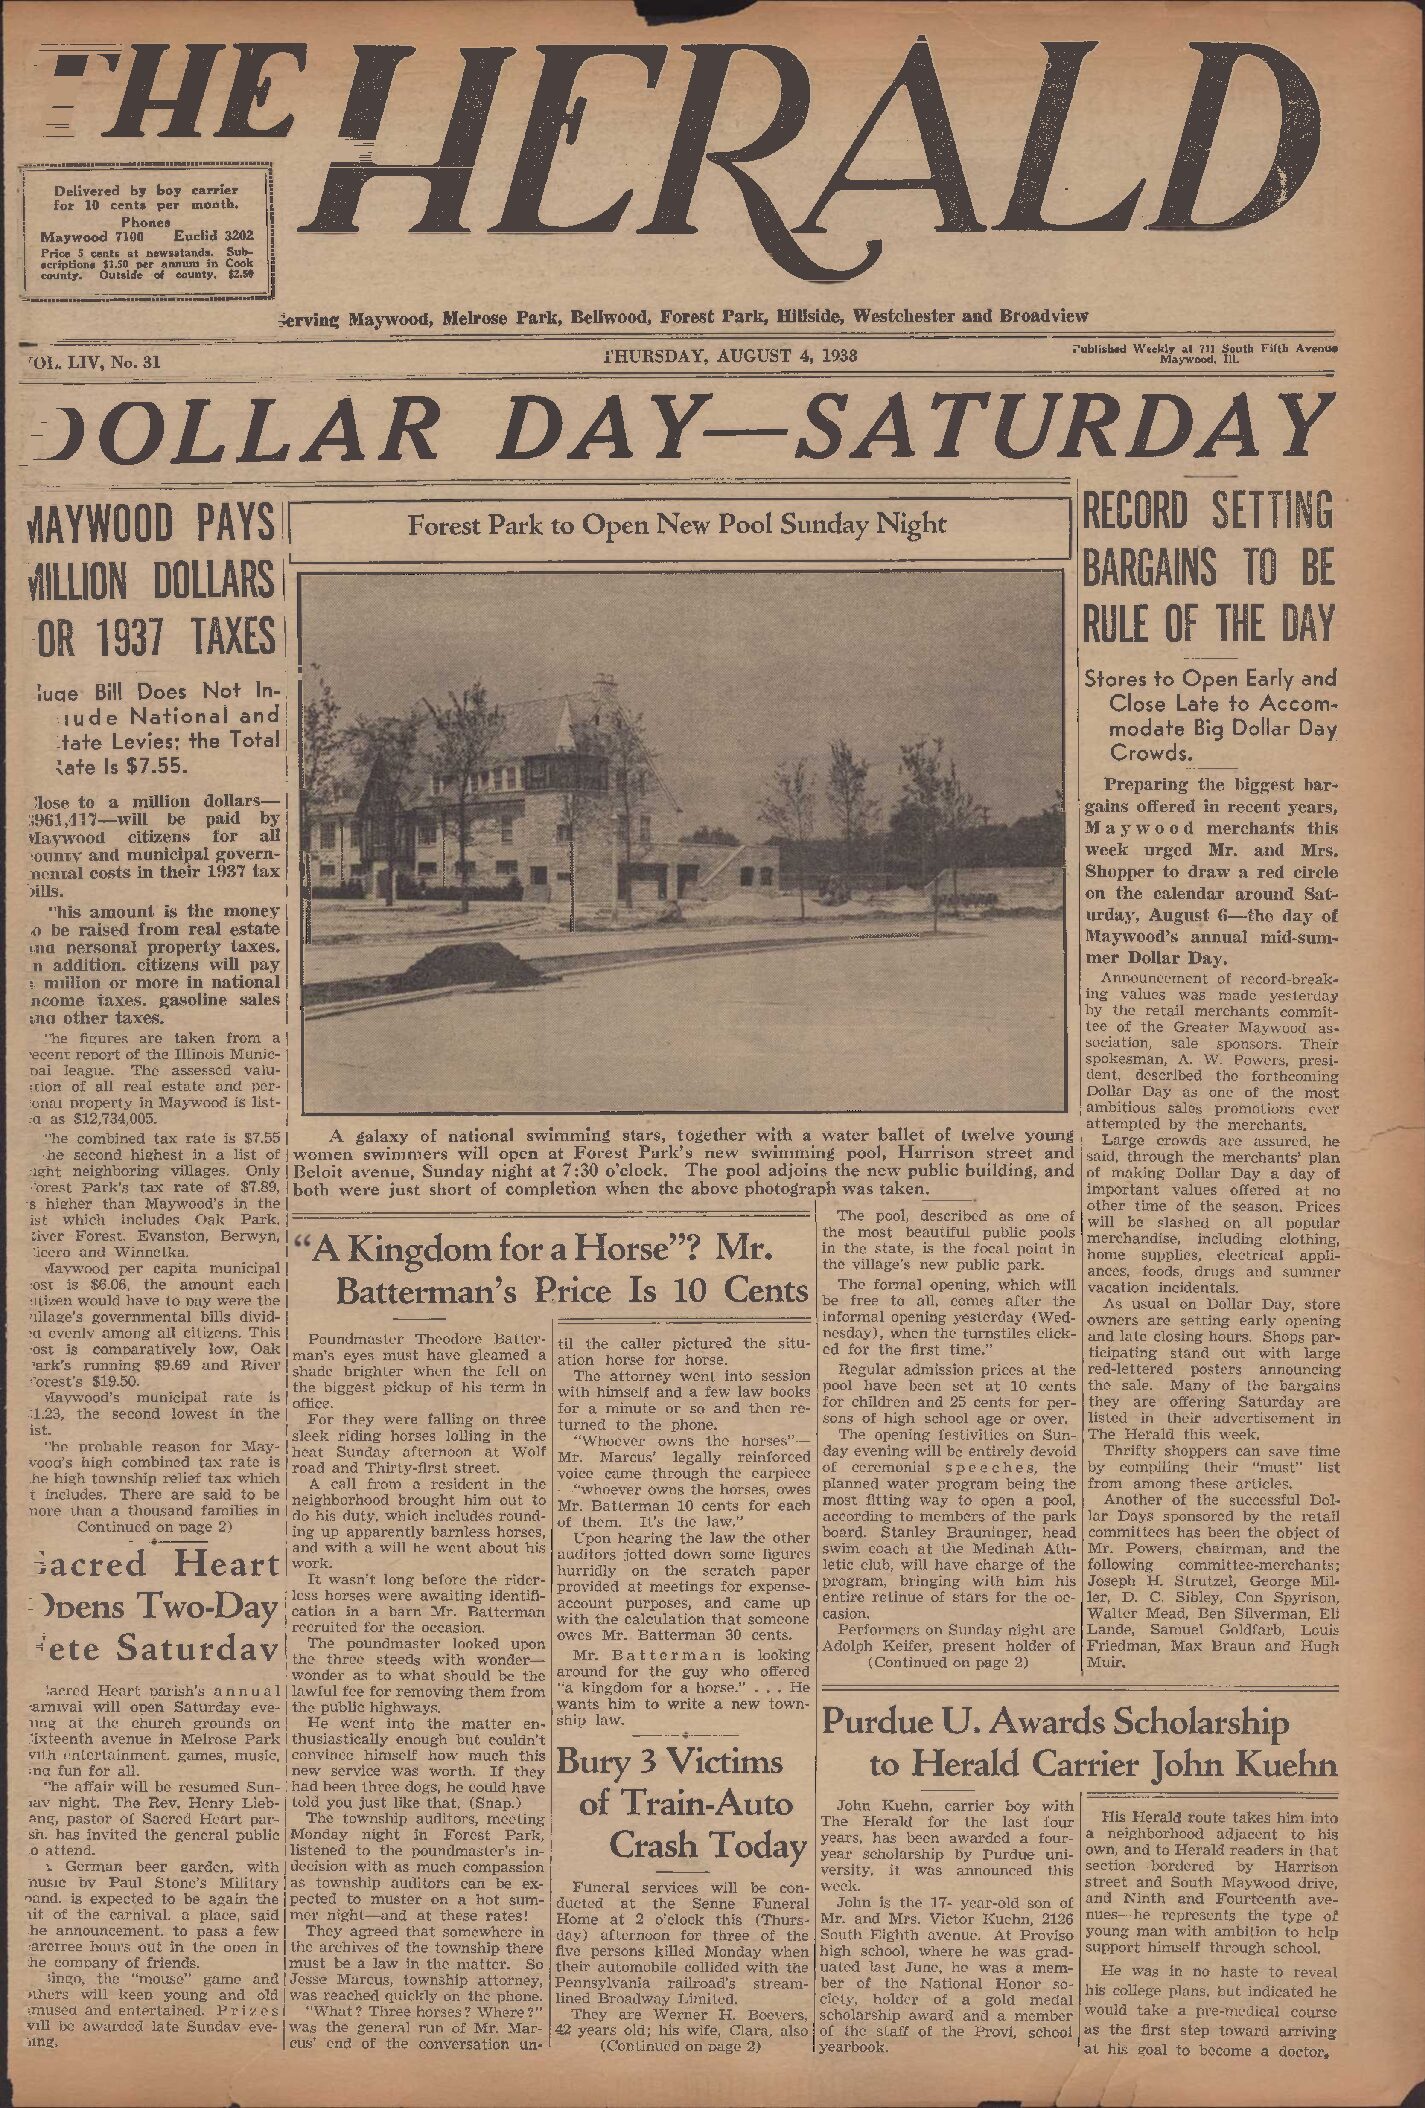 The Herald – 19380804